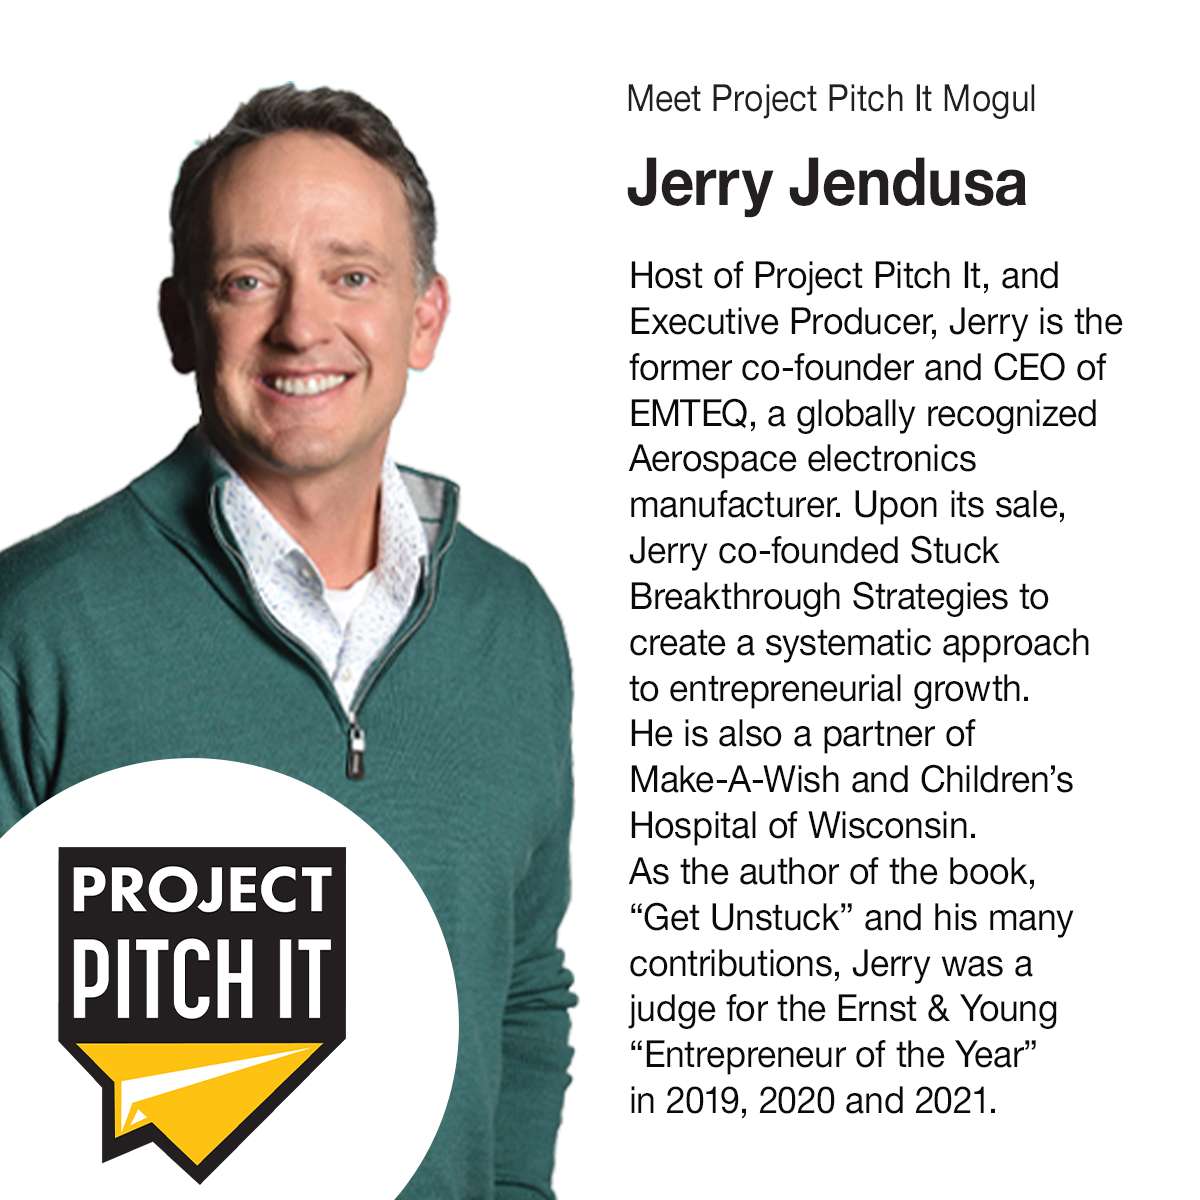 Get-to-know-project-pitch-it-mogul-jerry-jendusa-X